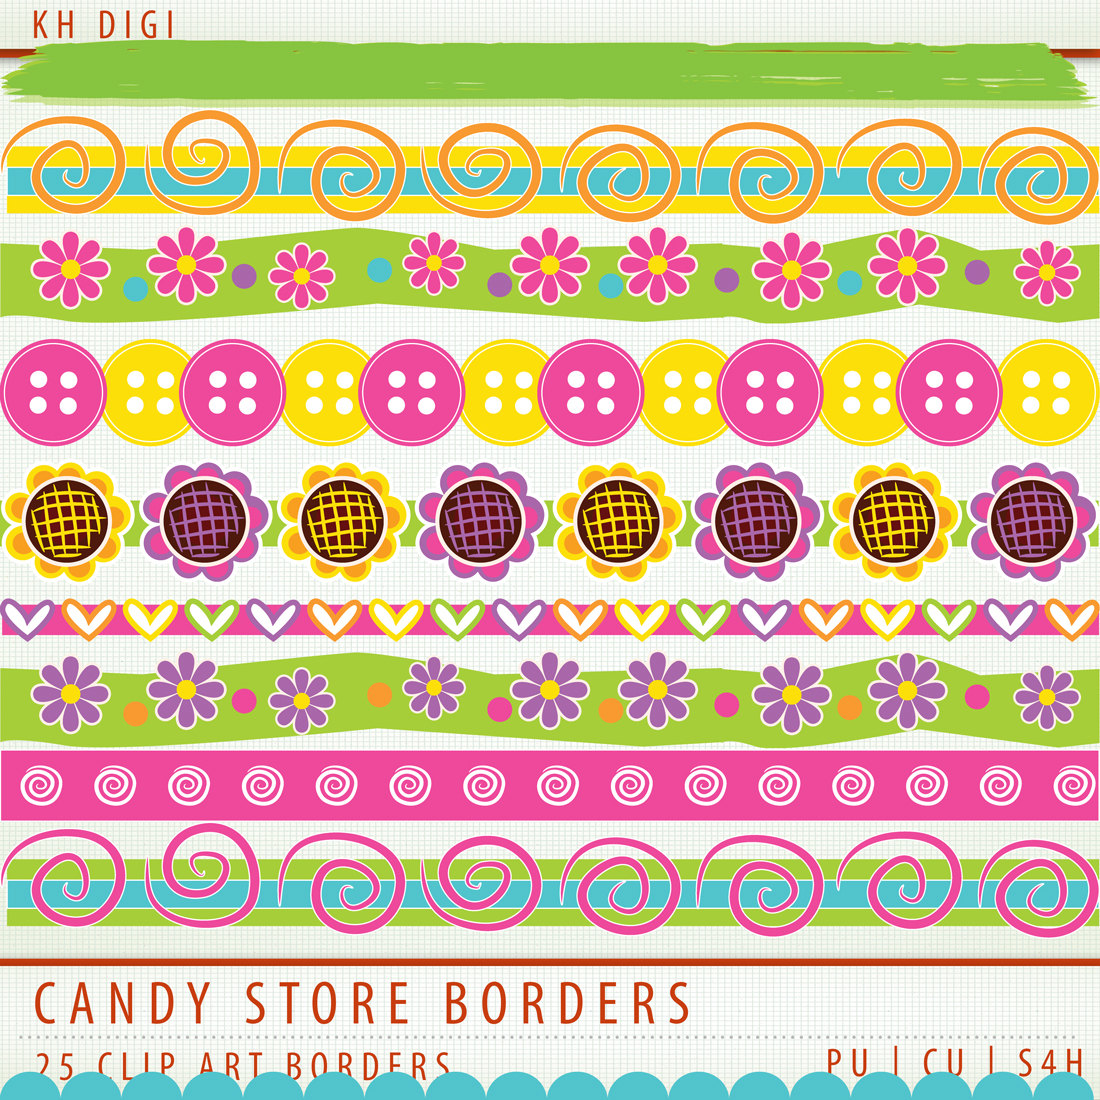 25 Digital Clip Art Borders Candy Store Floral Hearts By Khdigi